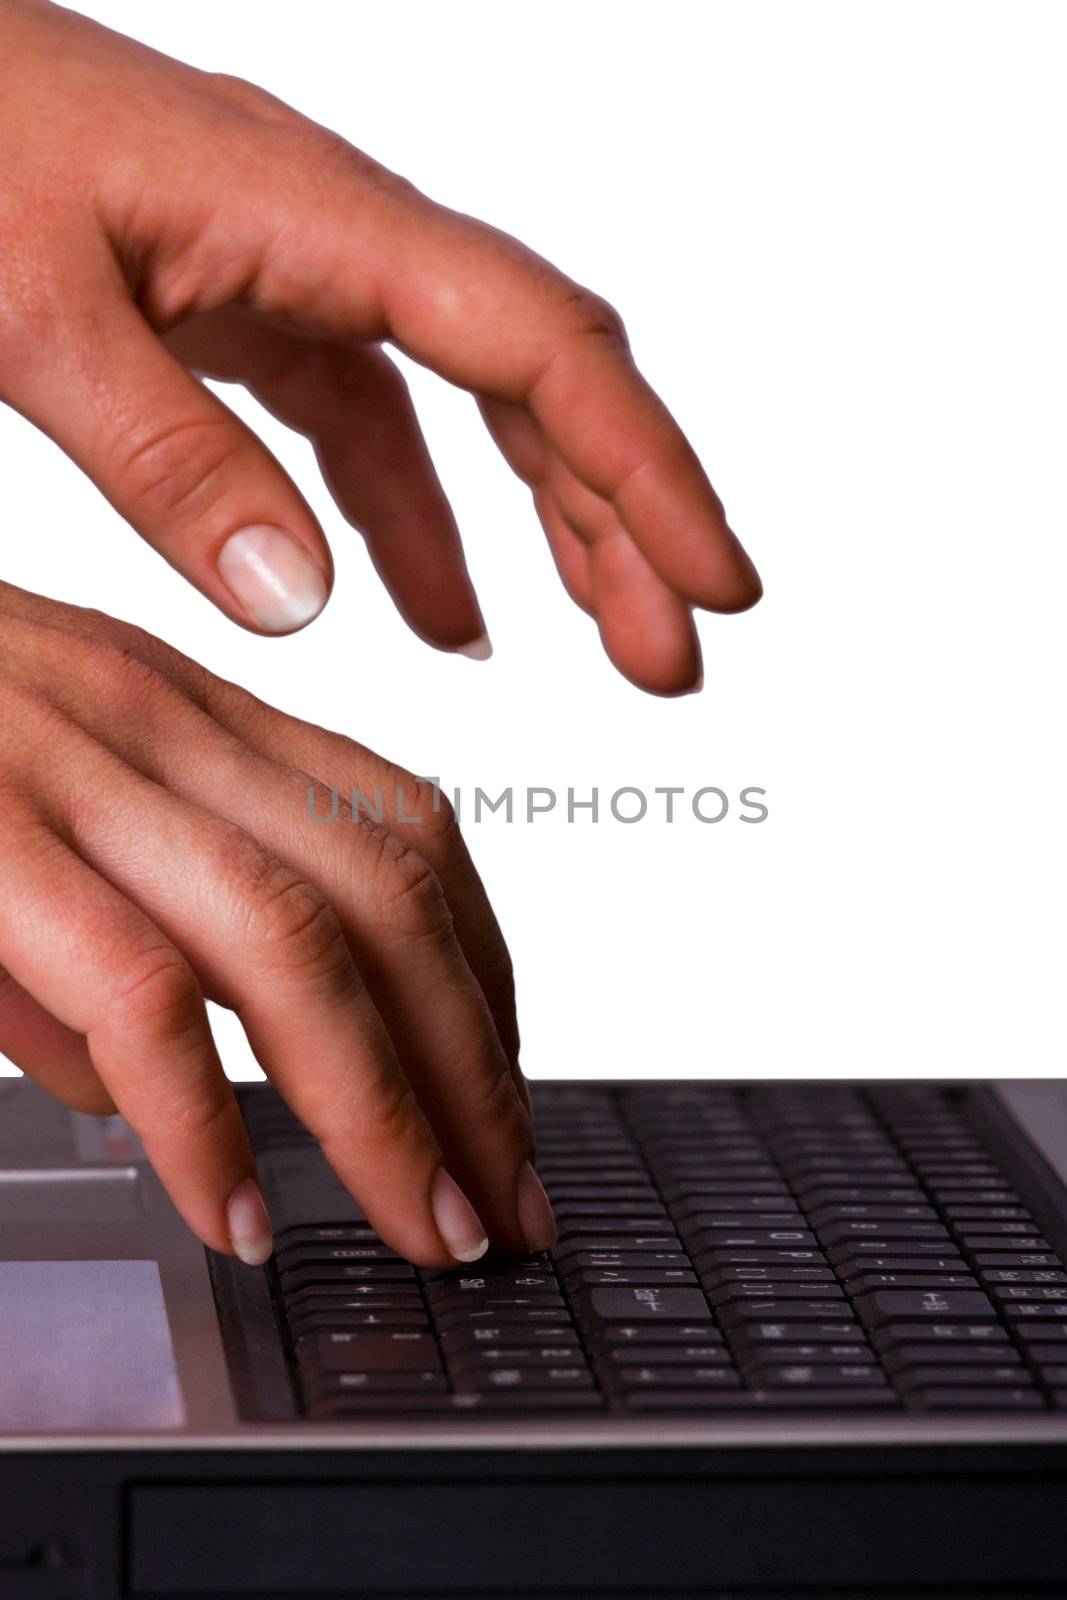 Woman working on laptop keyboard